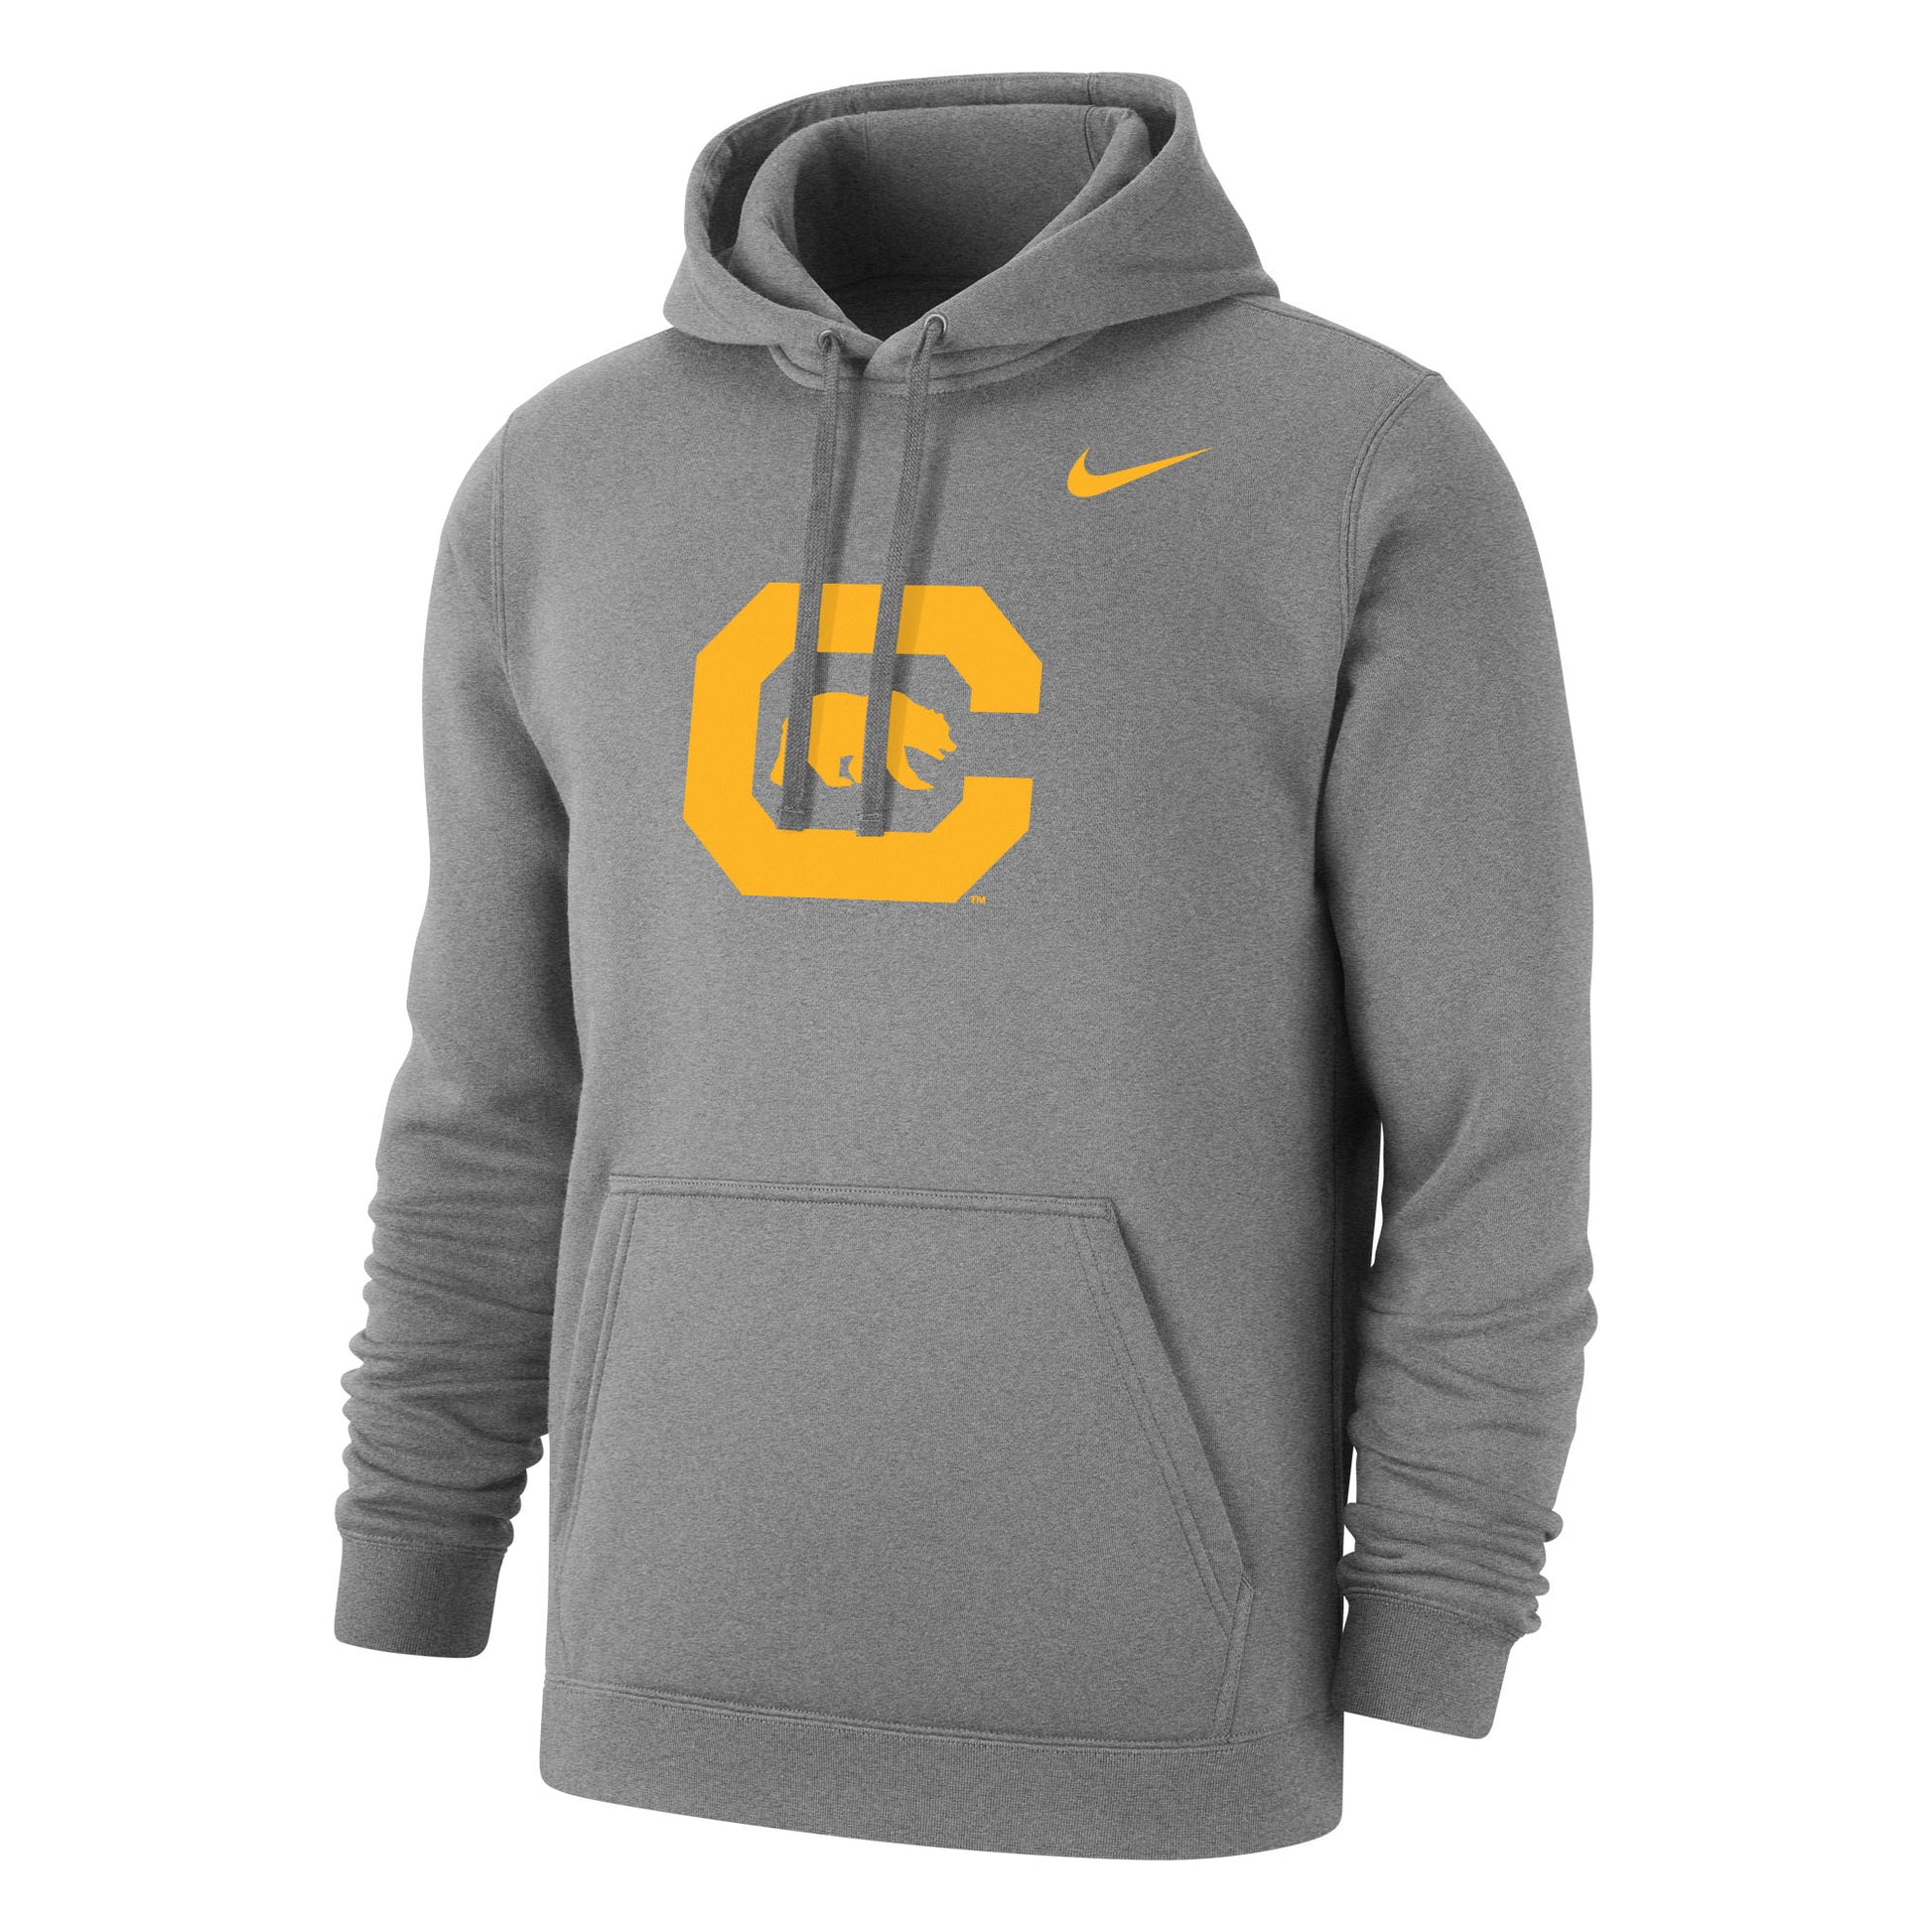 U.C. Berkeley Nike block C and bear club fleece hoodie sweatshirt-Grey-Shop College Wear